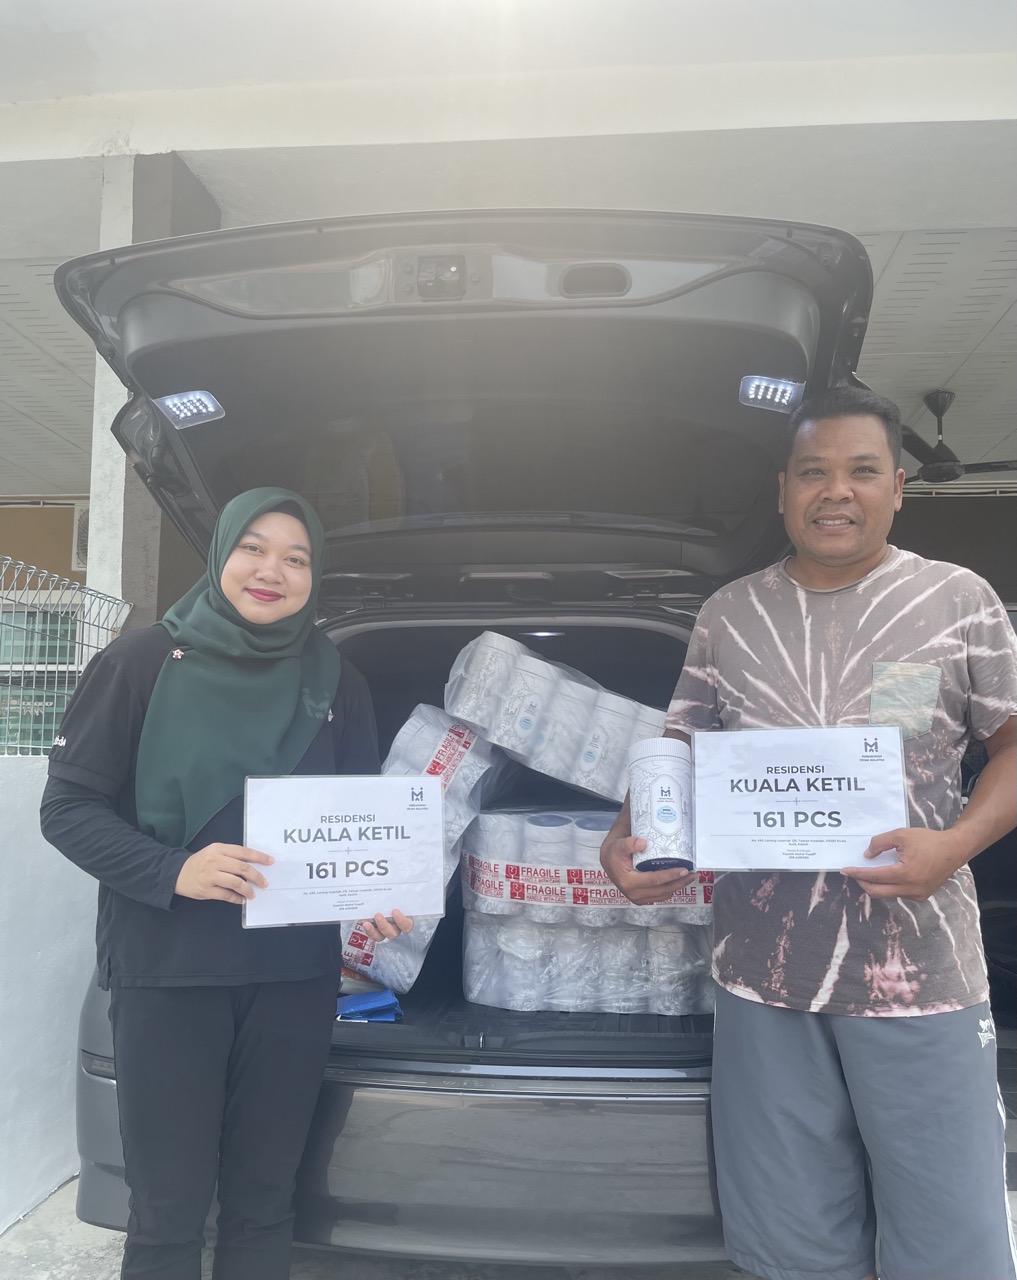 Cover image of Community Past Program: Sumbangan Ramadan – Distribution of Kurma to Residensi Kuala Ketil, Kedah.